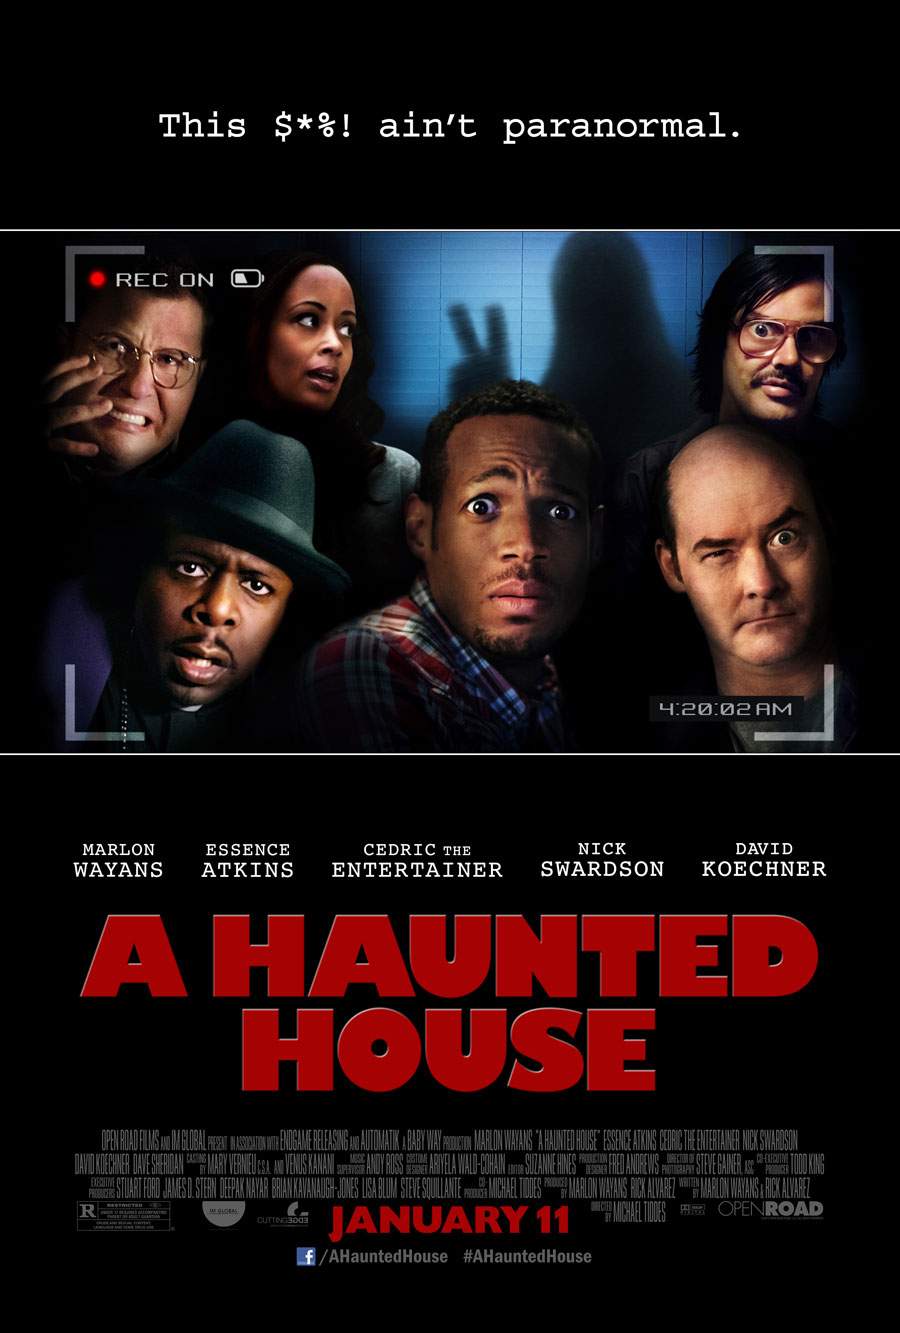 Horror House movie